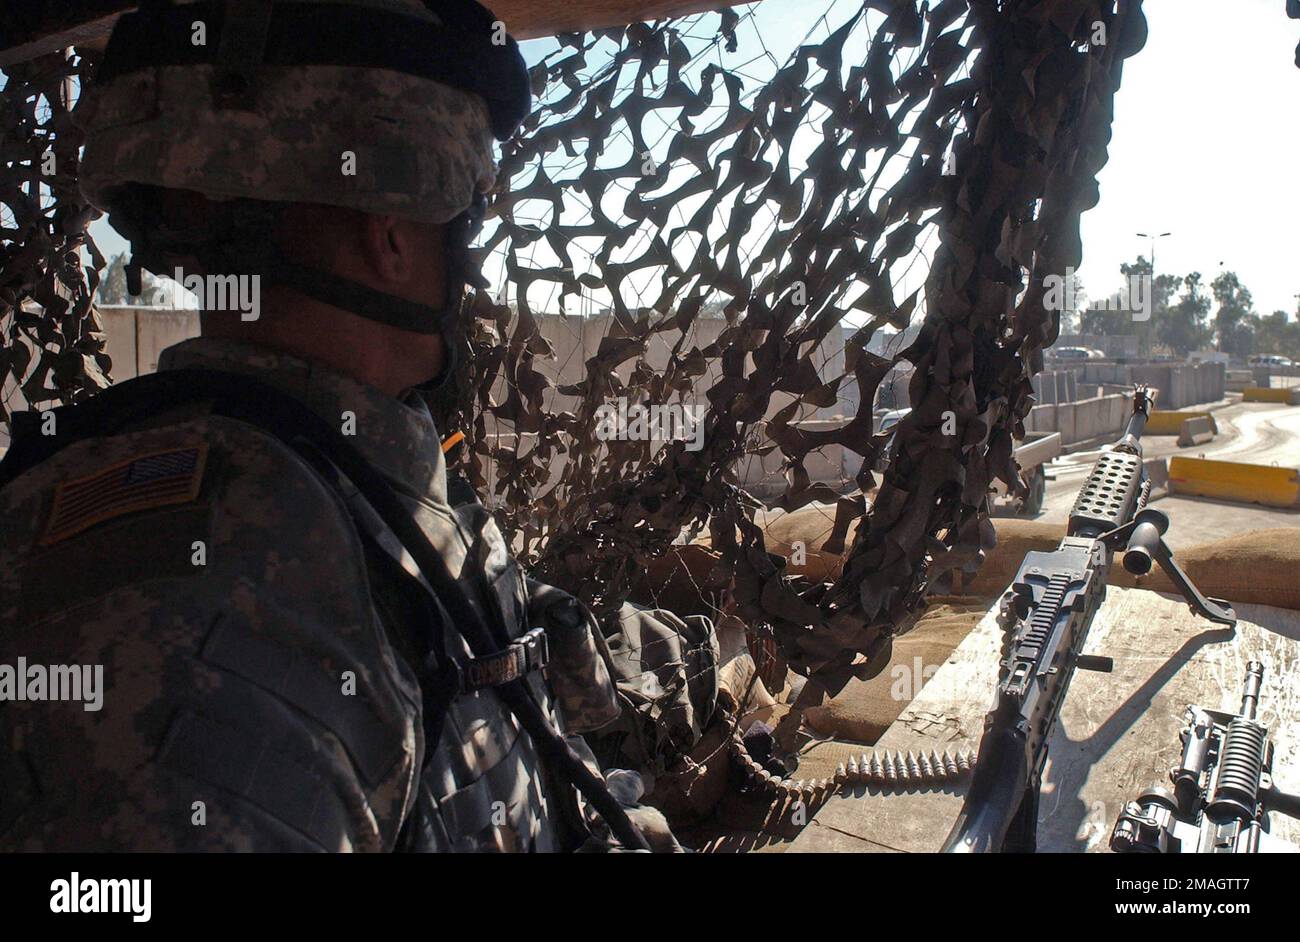 070117-A-6553A-012. Base: Fob Prosperity Country: Iraq (IRQ) Scene Major Command Shown: SOUTHEAST Stock Photo